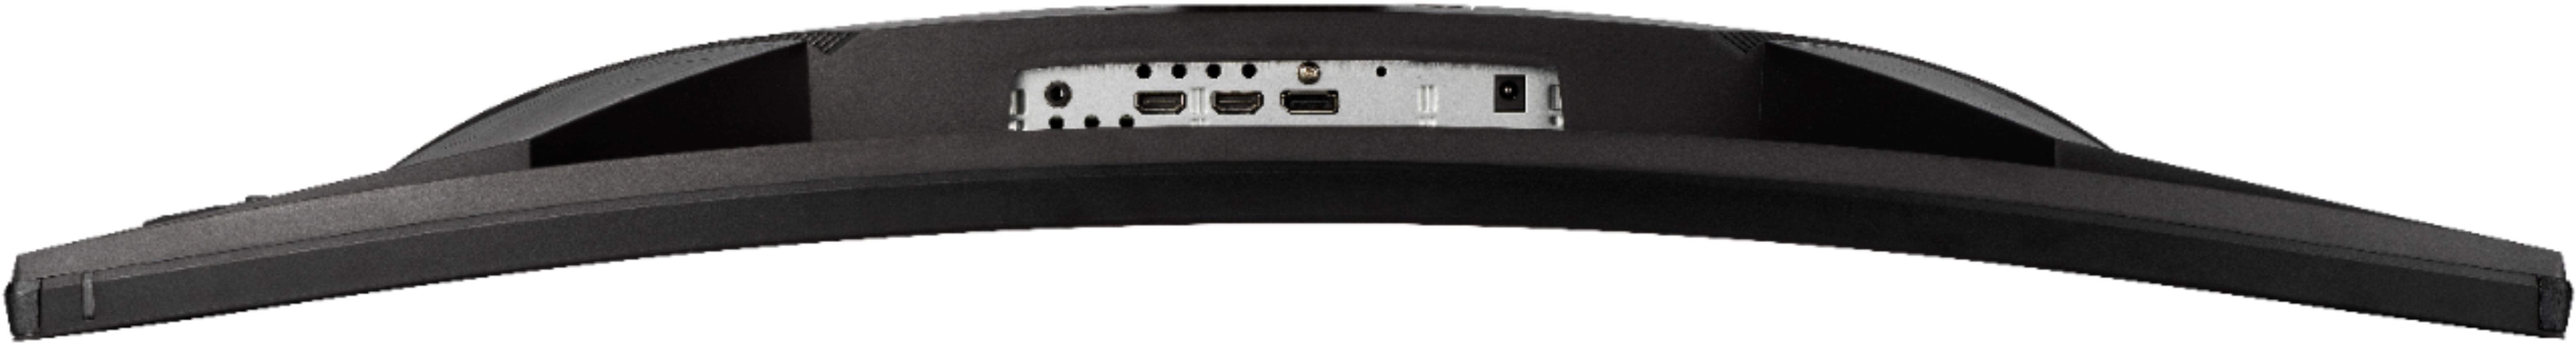 Left View: ASUS - TUF 31.5" Curved QHD 165Hz 1ms 1440P Freesync Premium Gaming Monitor (DisplayPort,HDMI)